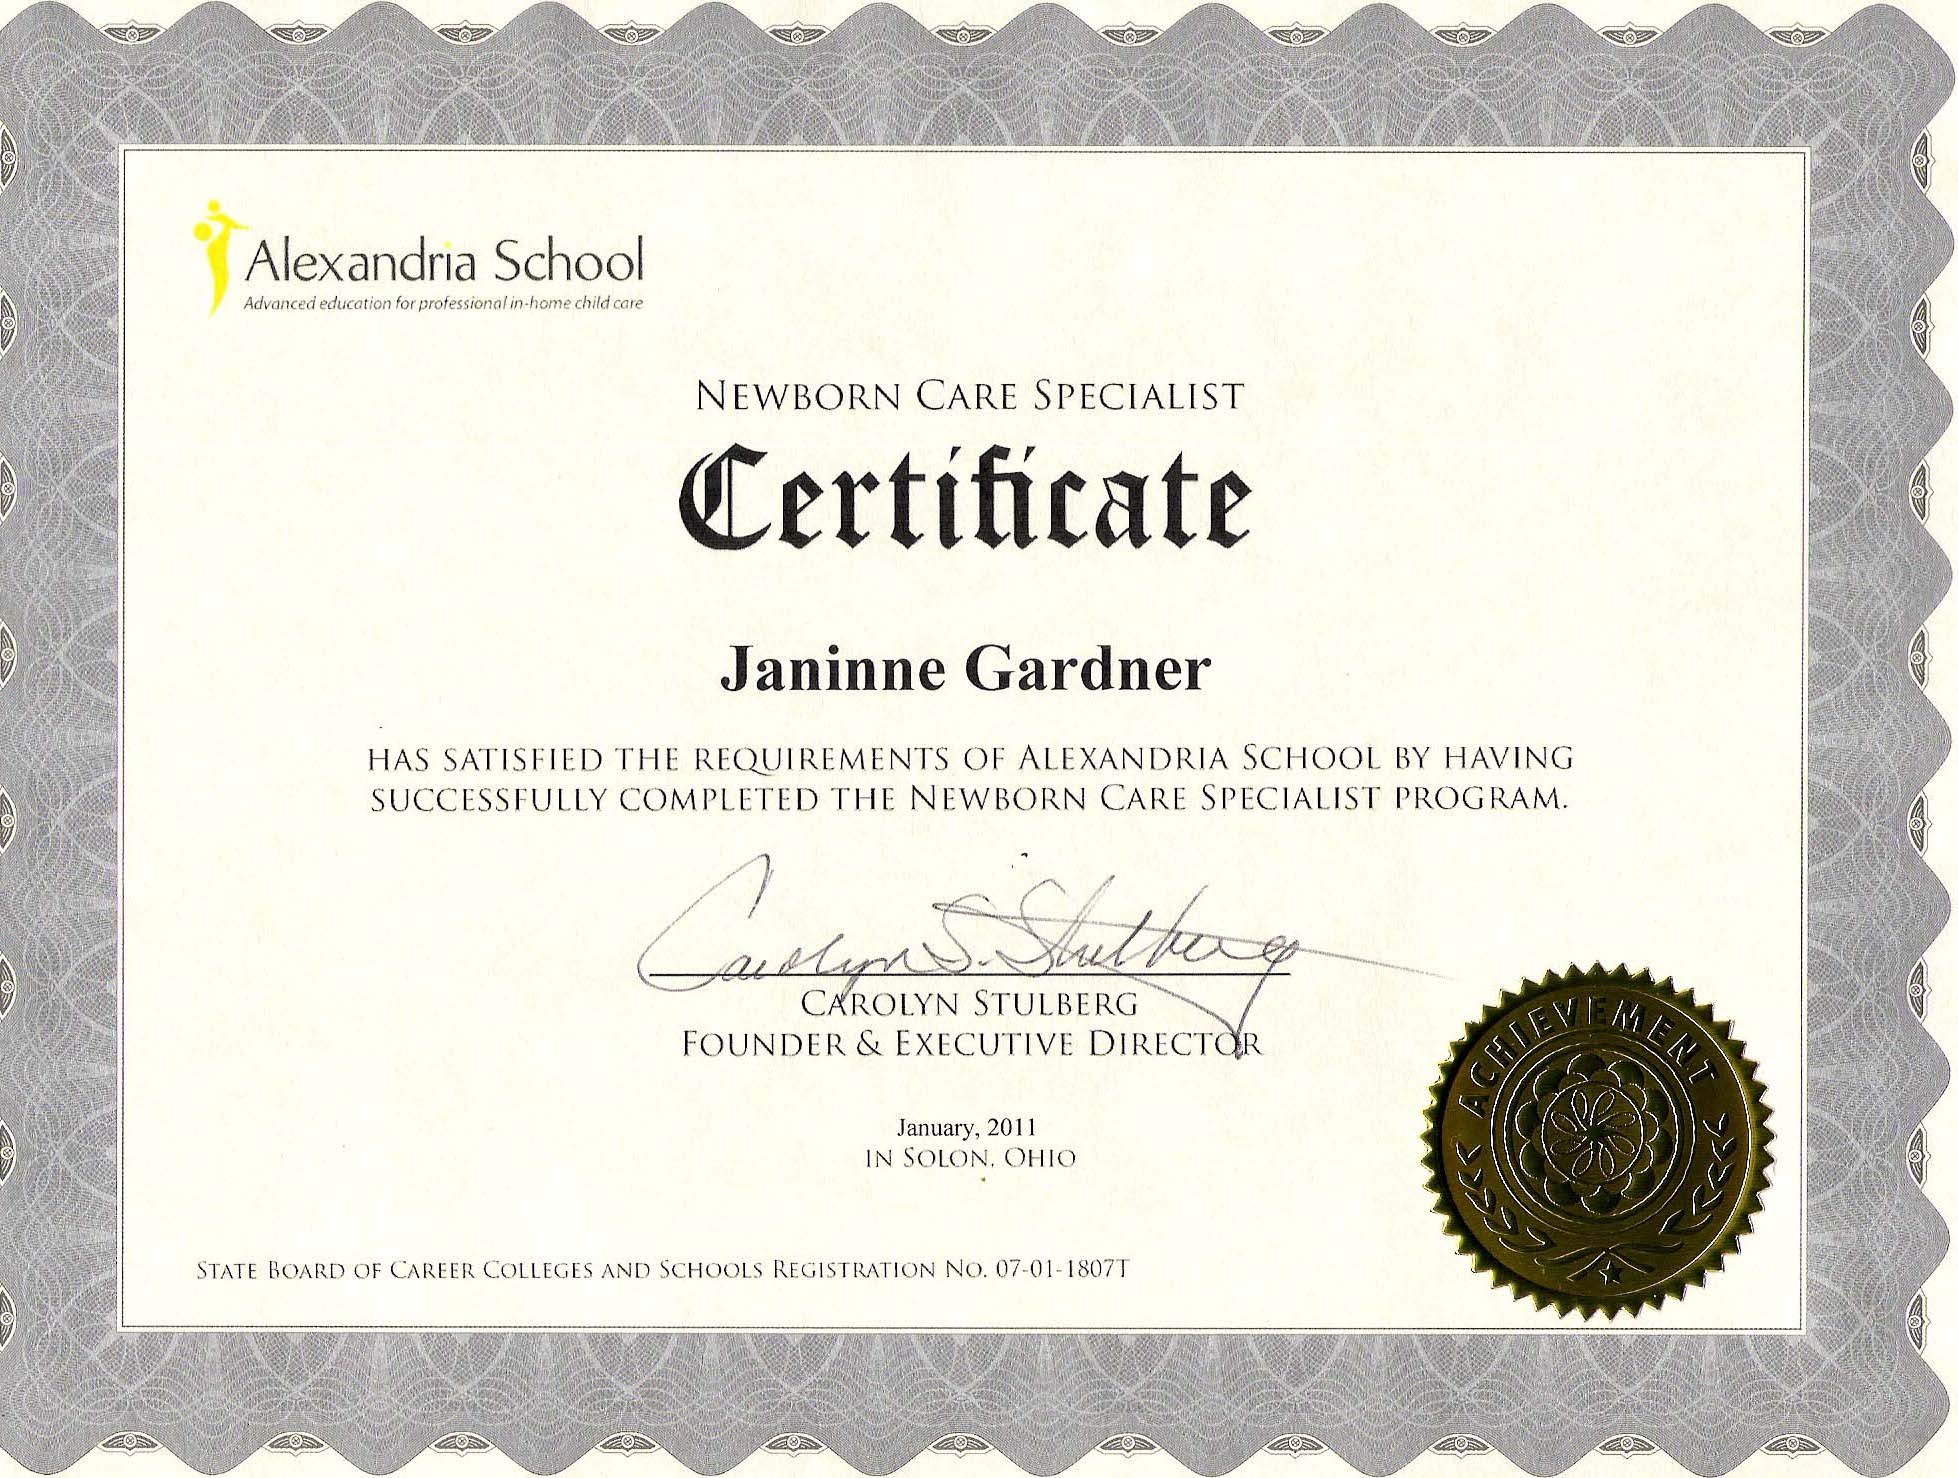 ICT Academy: Newborn Care Specialist Certification, Baby Nurse